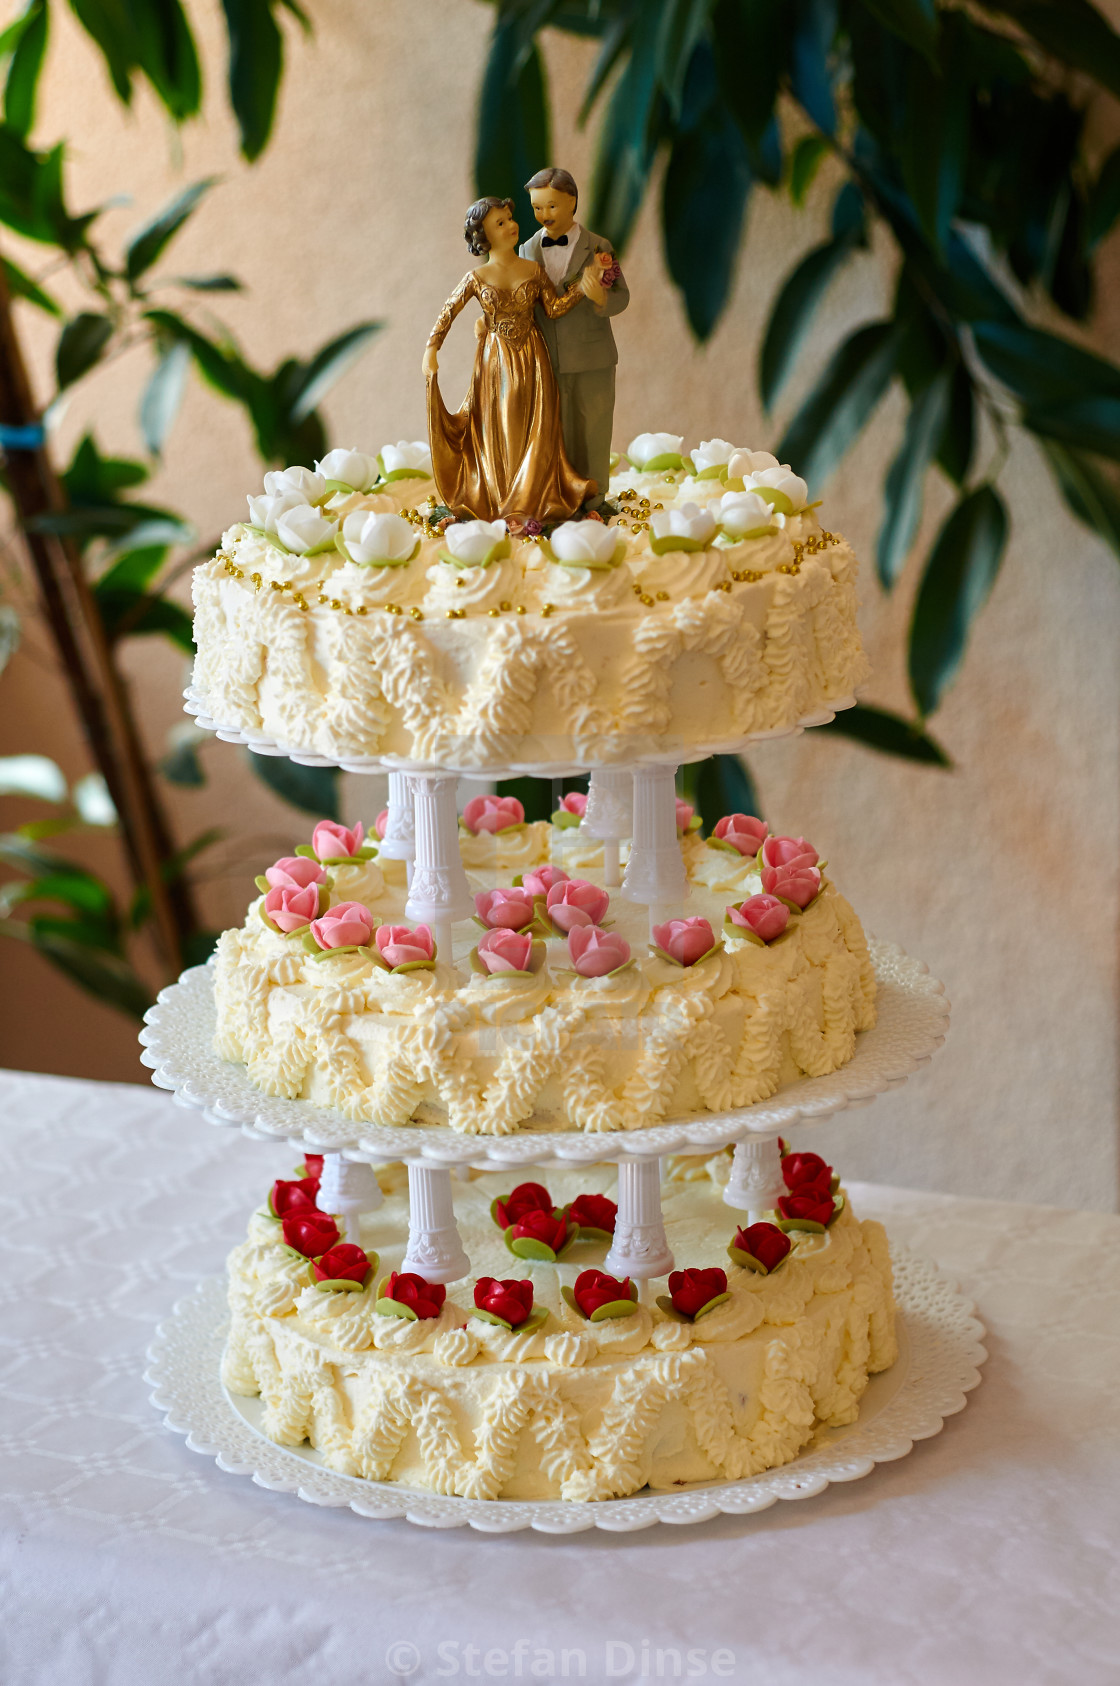 traditional wedding cake dessert for anniversary - License ...